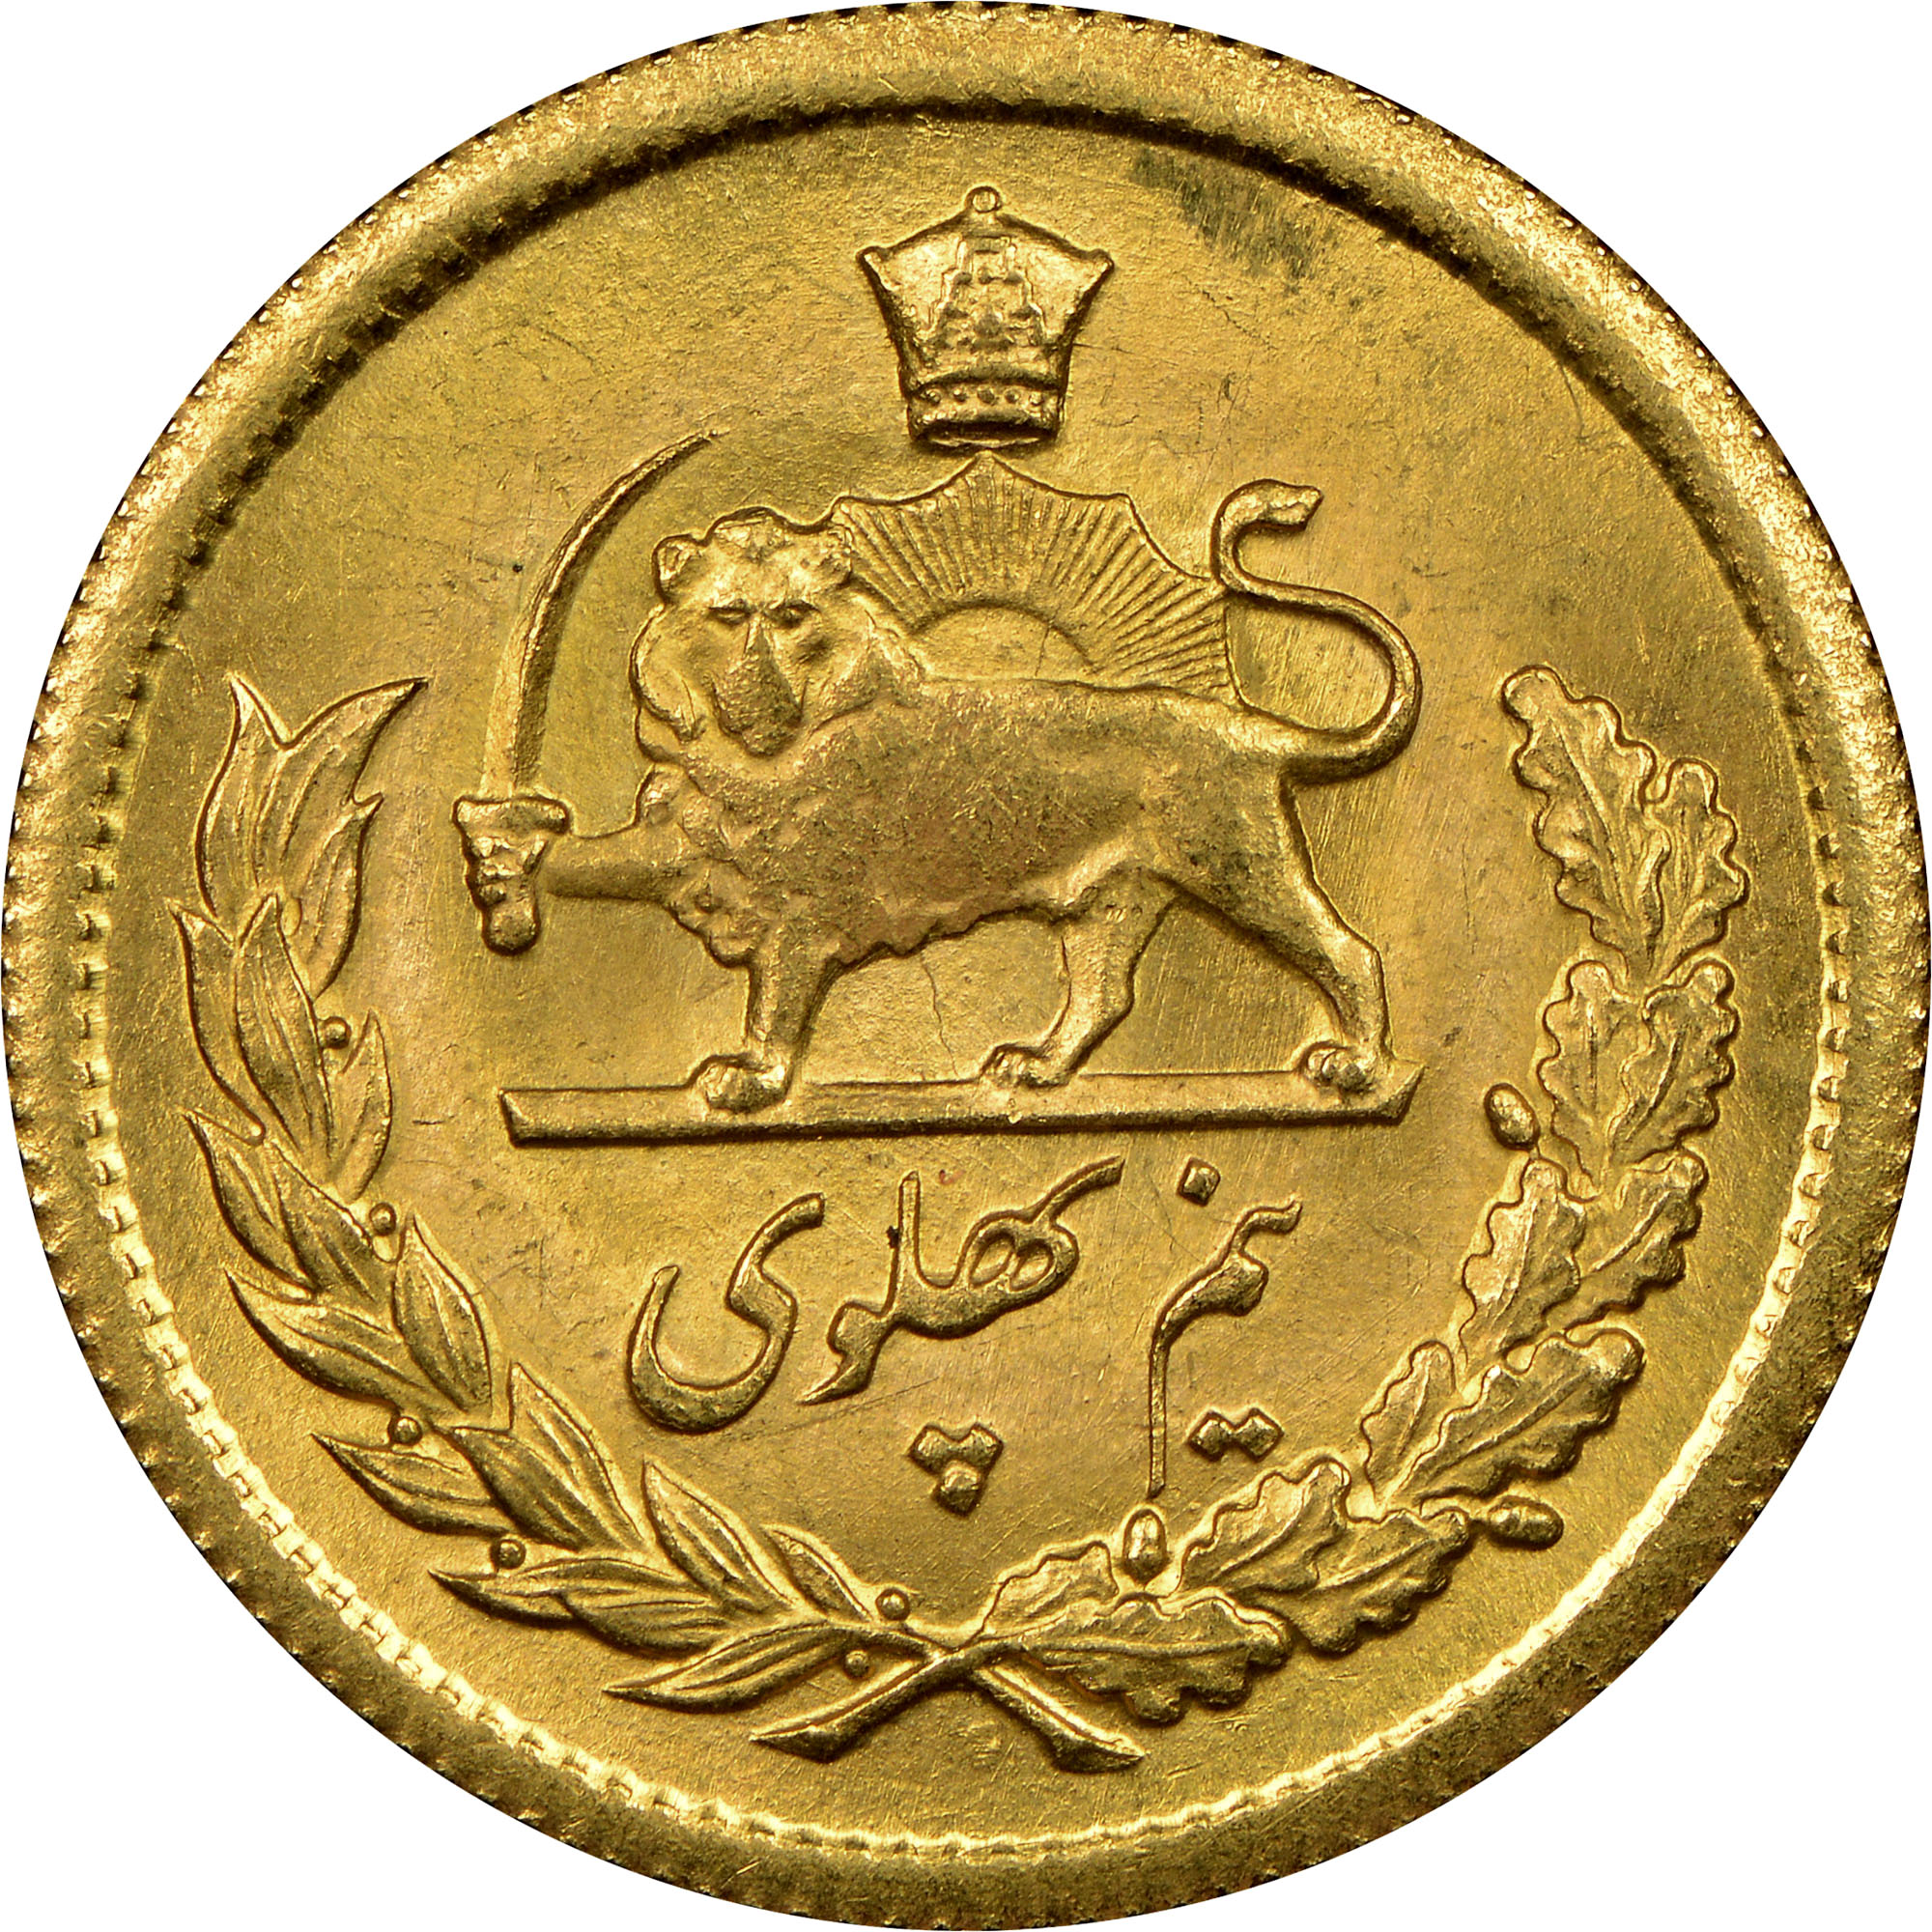 Iranian Pahlavi Gold Coins